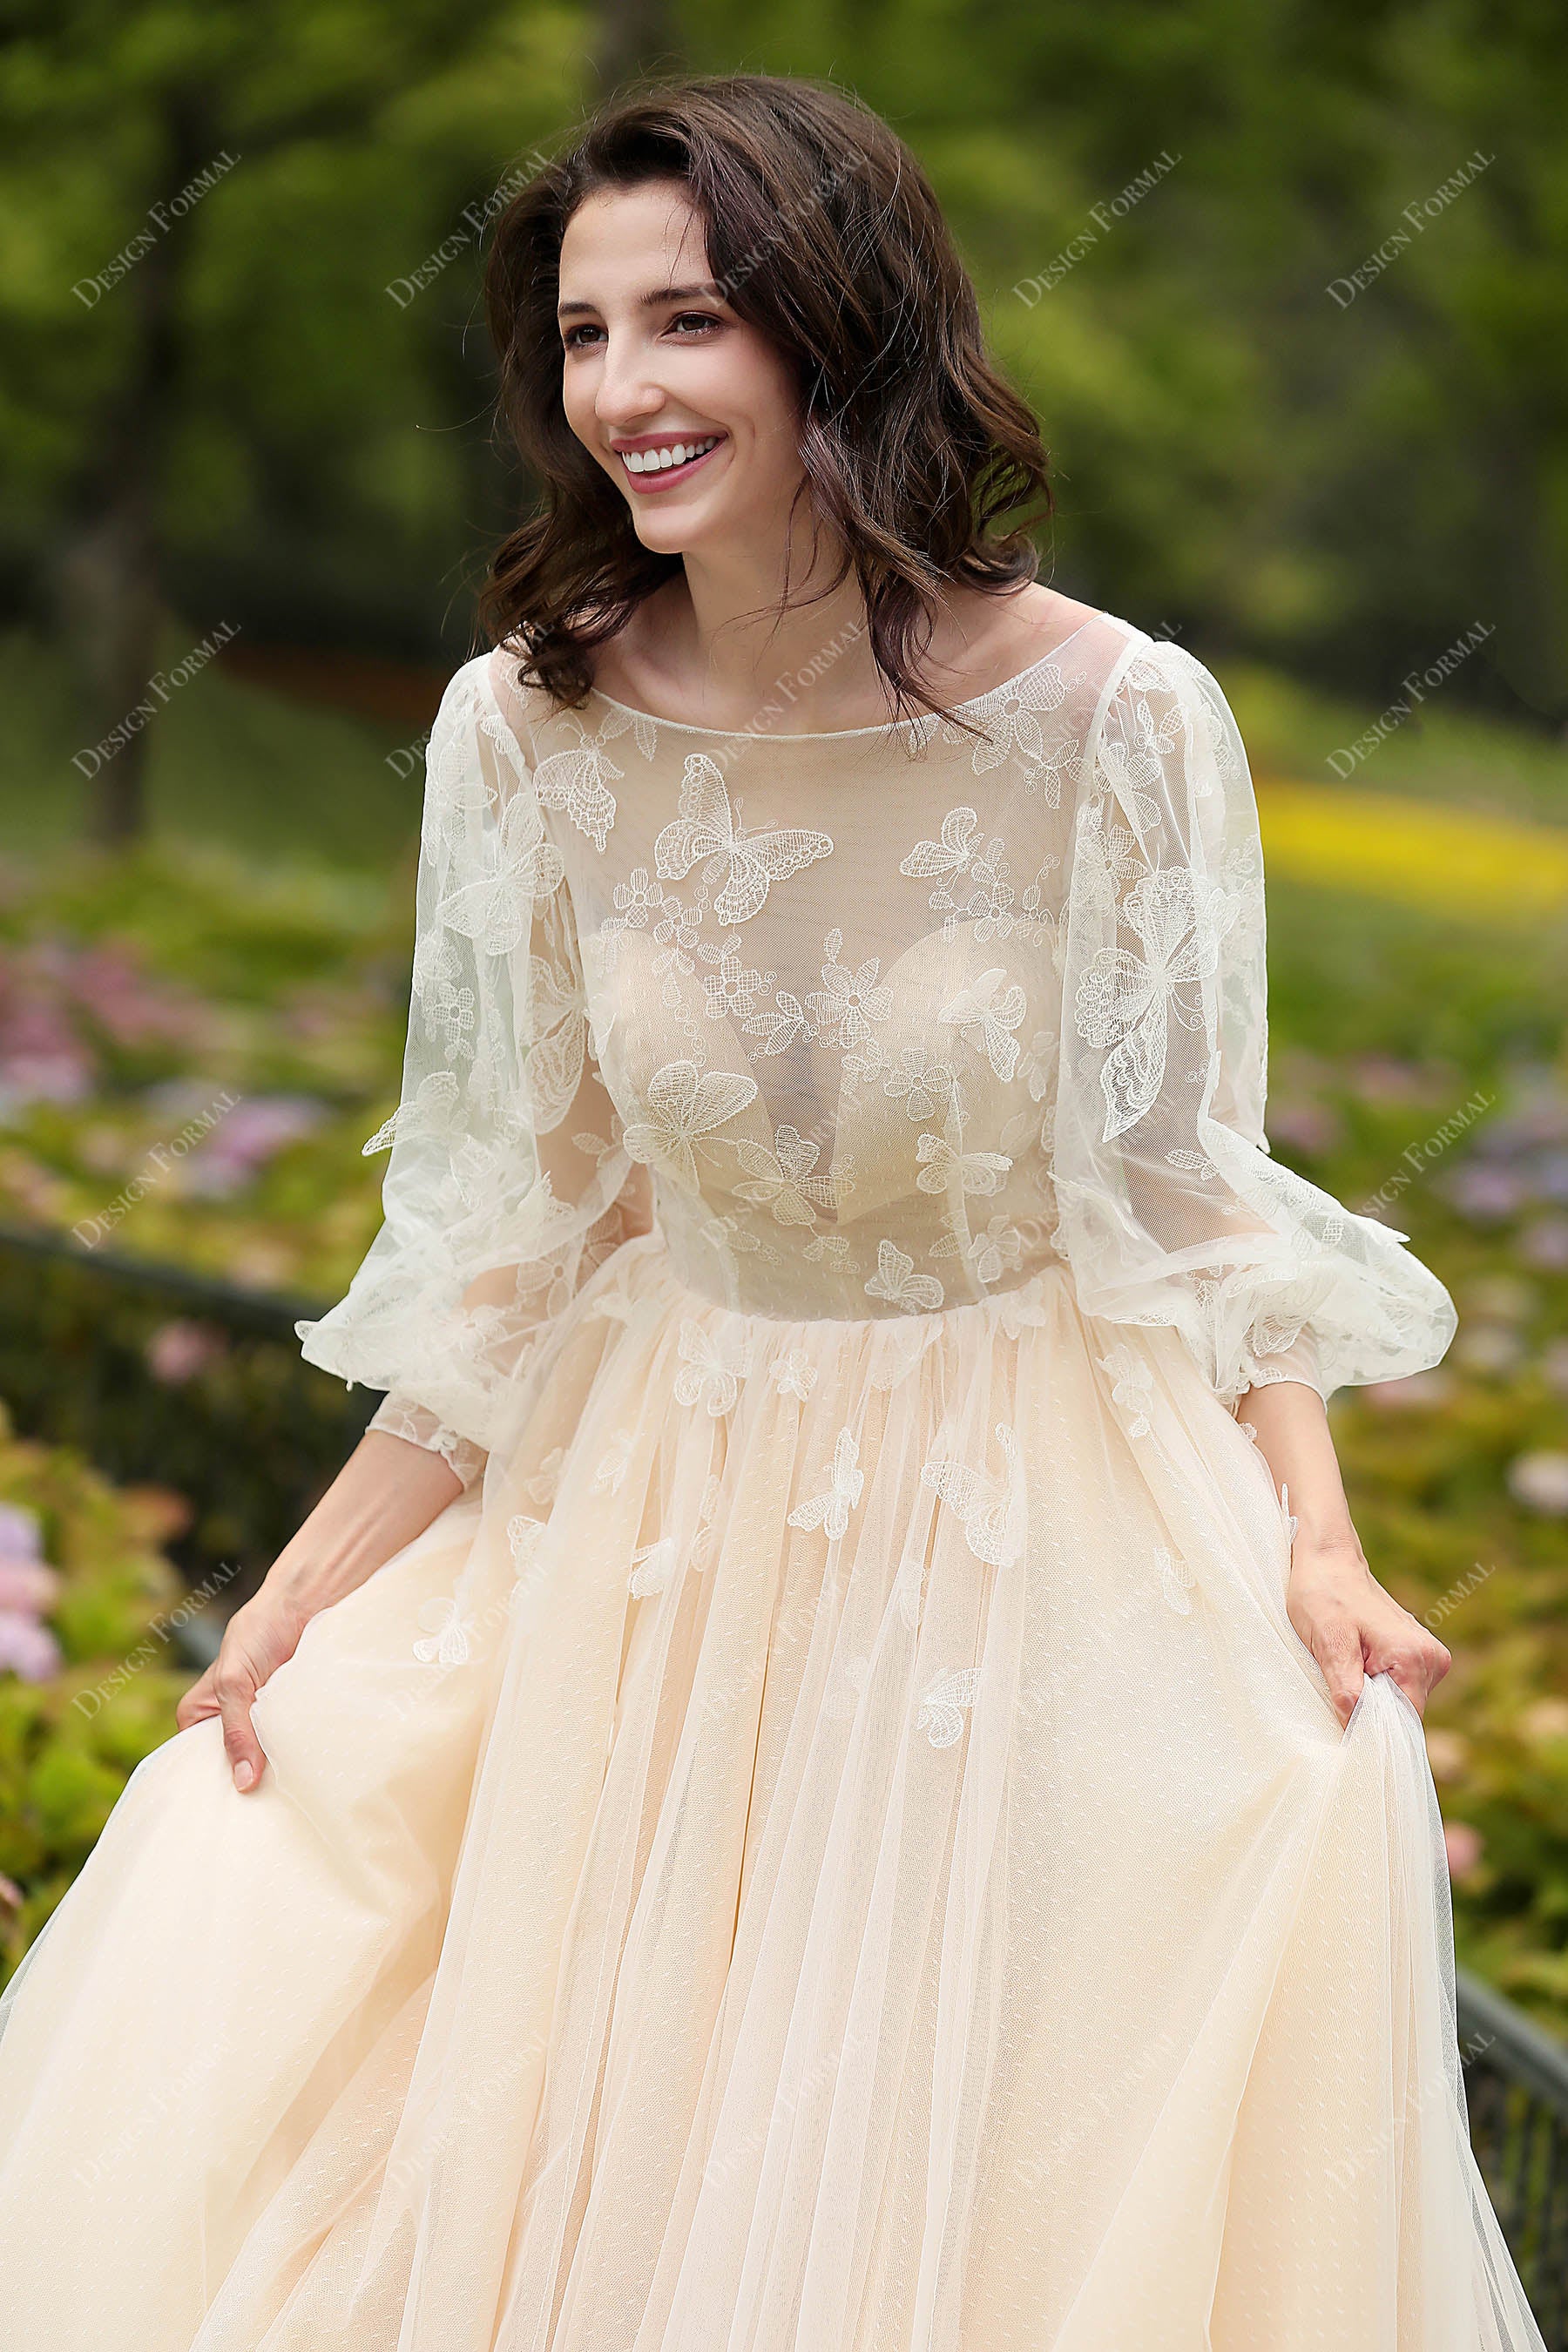 Illusion Neck Lace Tulle Wedding Dress